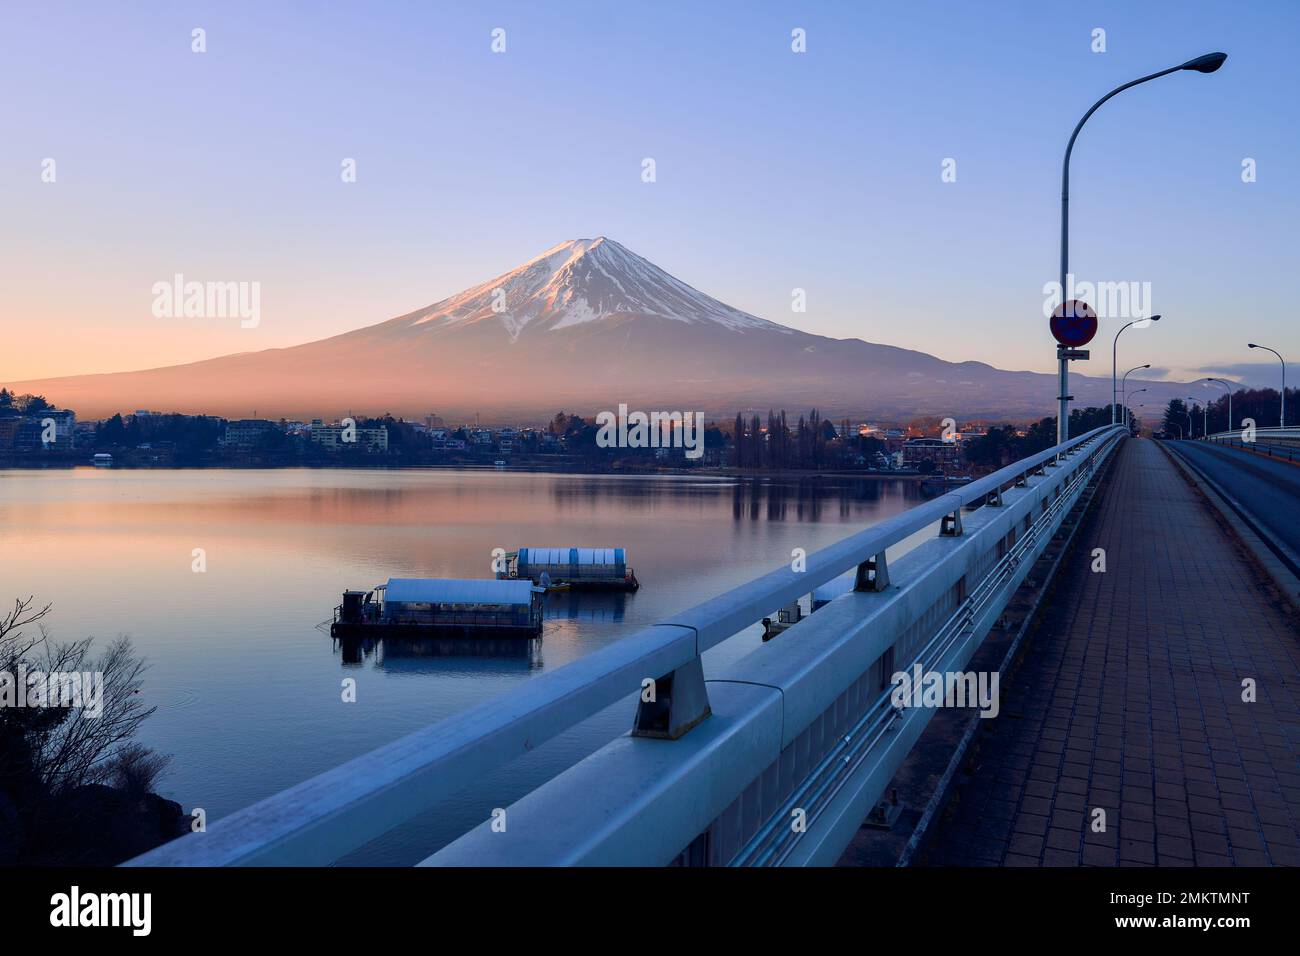 Mount Fuji from Kawaguchiko Ohashi Bridge during sunrise. Stock Photo